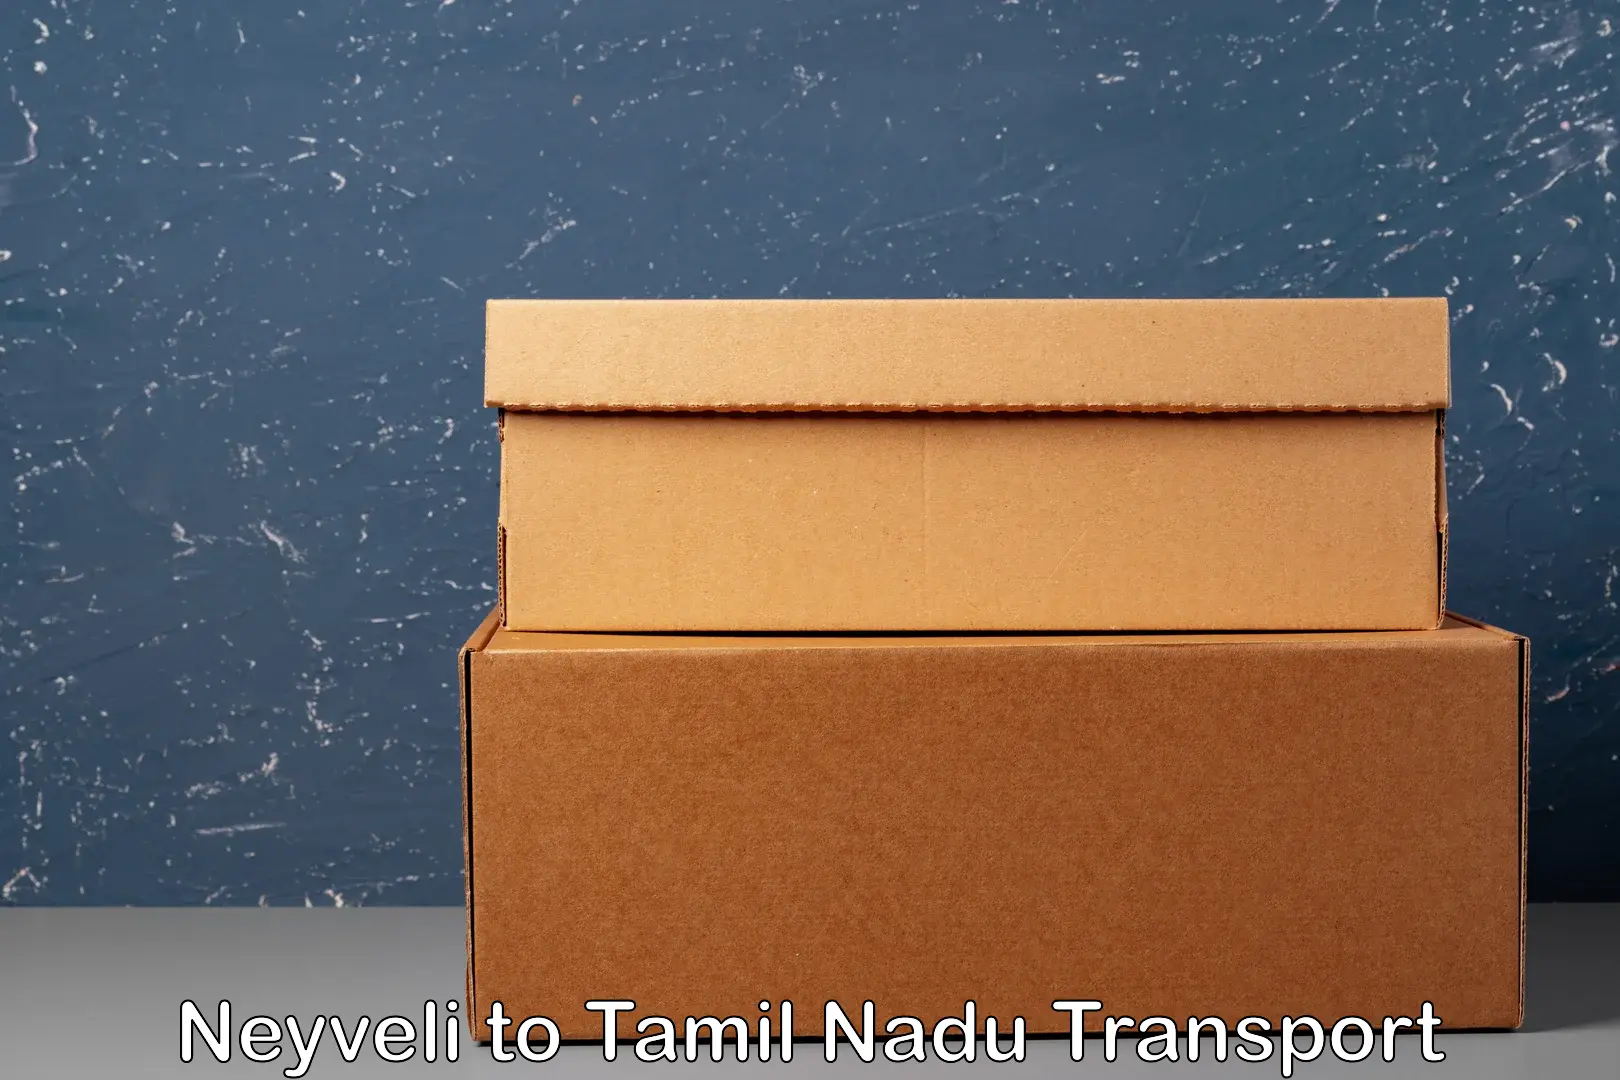 Container transport service Neyveli to Tamil Nadu